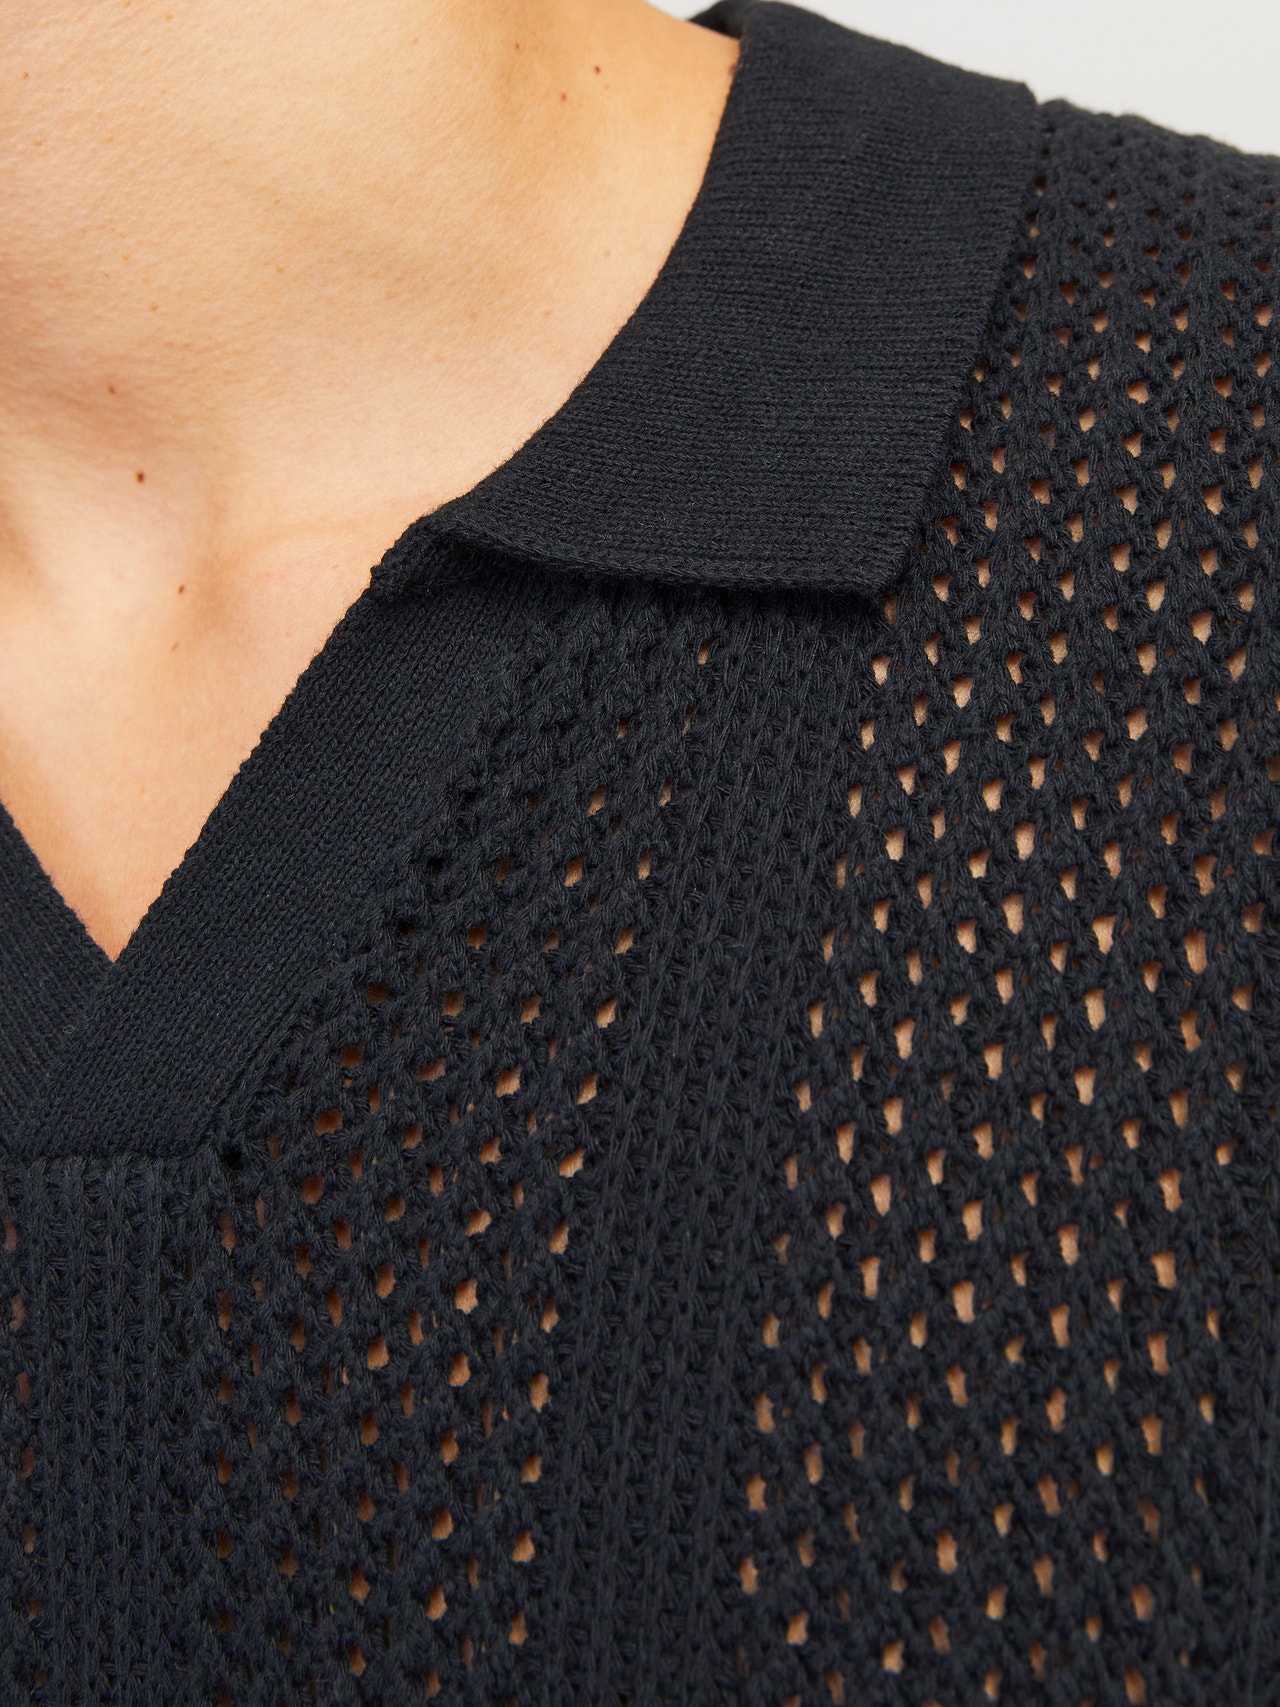 Jack & Jones Regular Fit Split neck Sweater -Black - 12255014